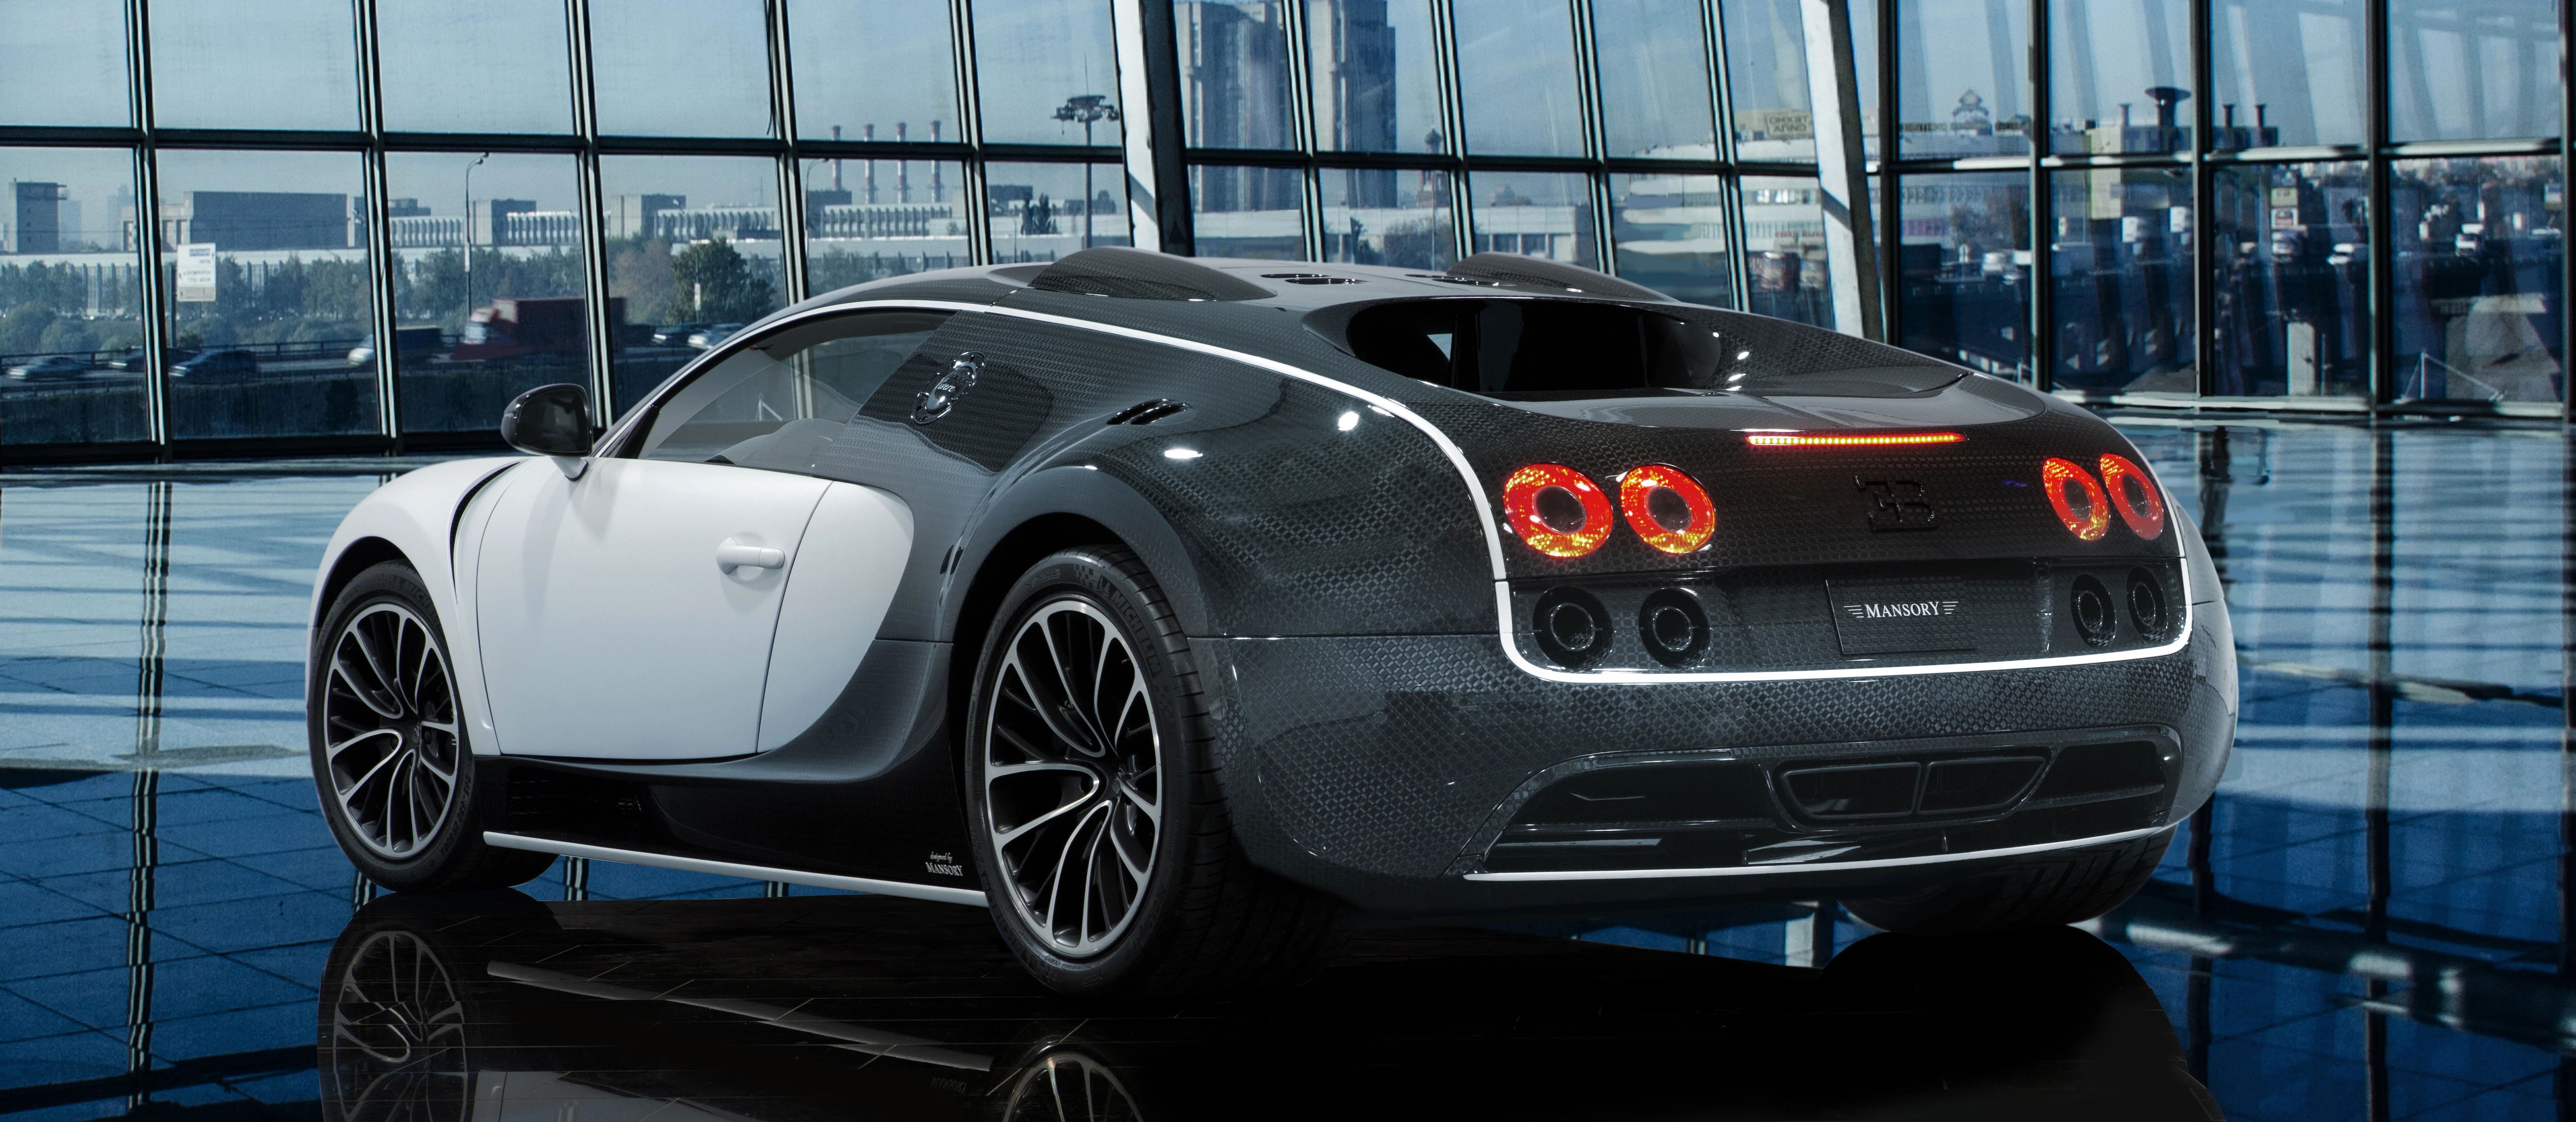 World's most expensive luxury cars - Bugatti Mansory Vivere via Mansory.